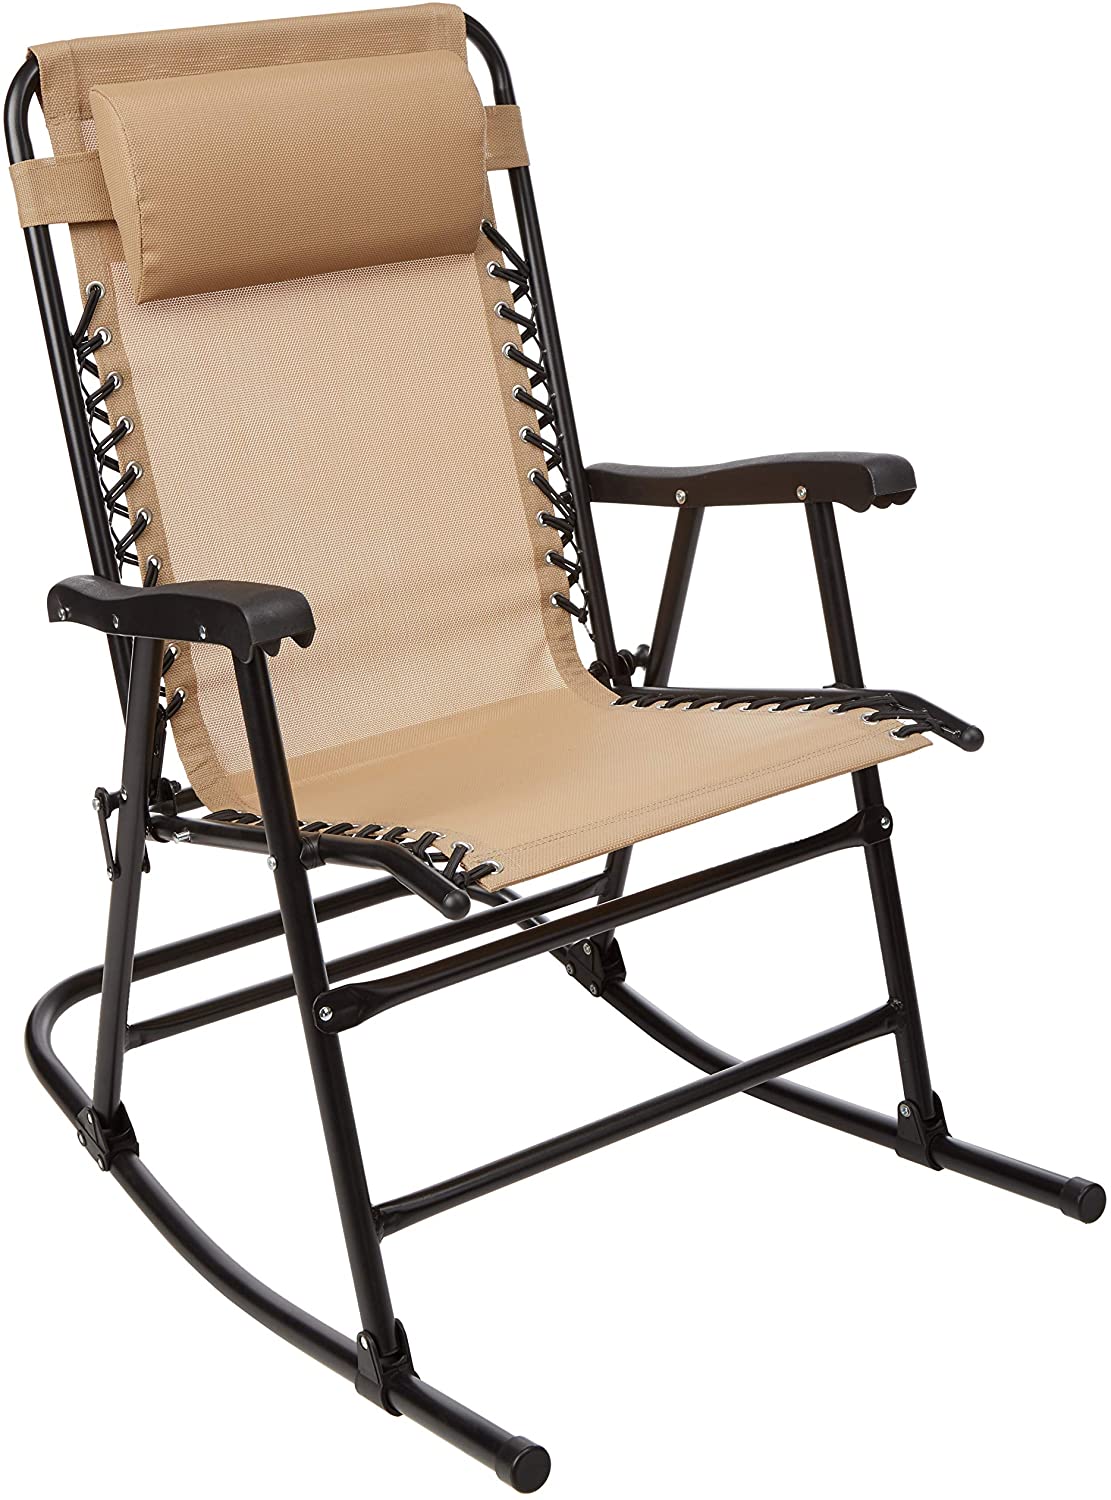 AmazonBasics Outdoor Folding Patio Rocking Chair